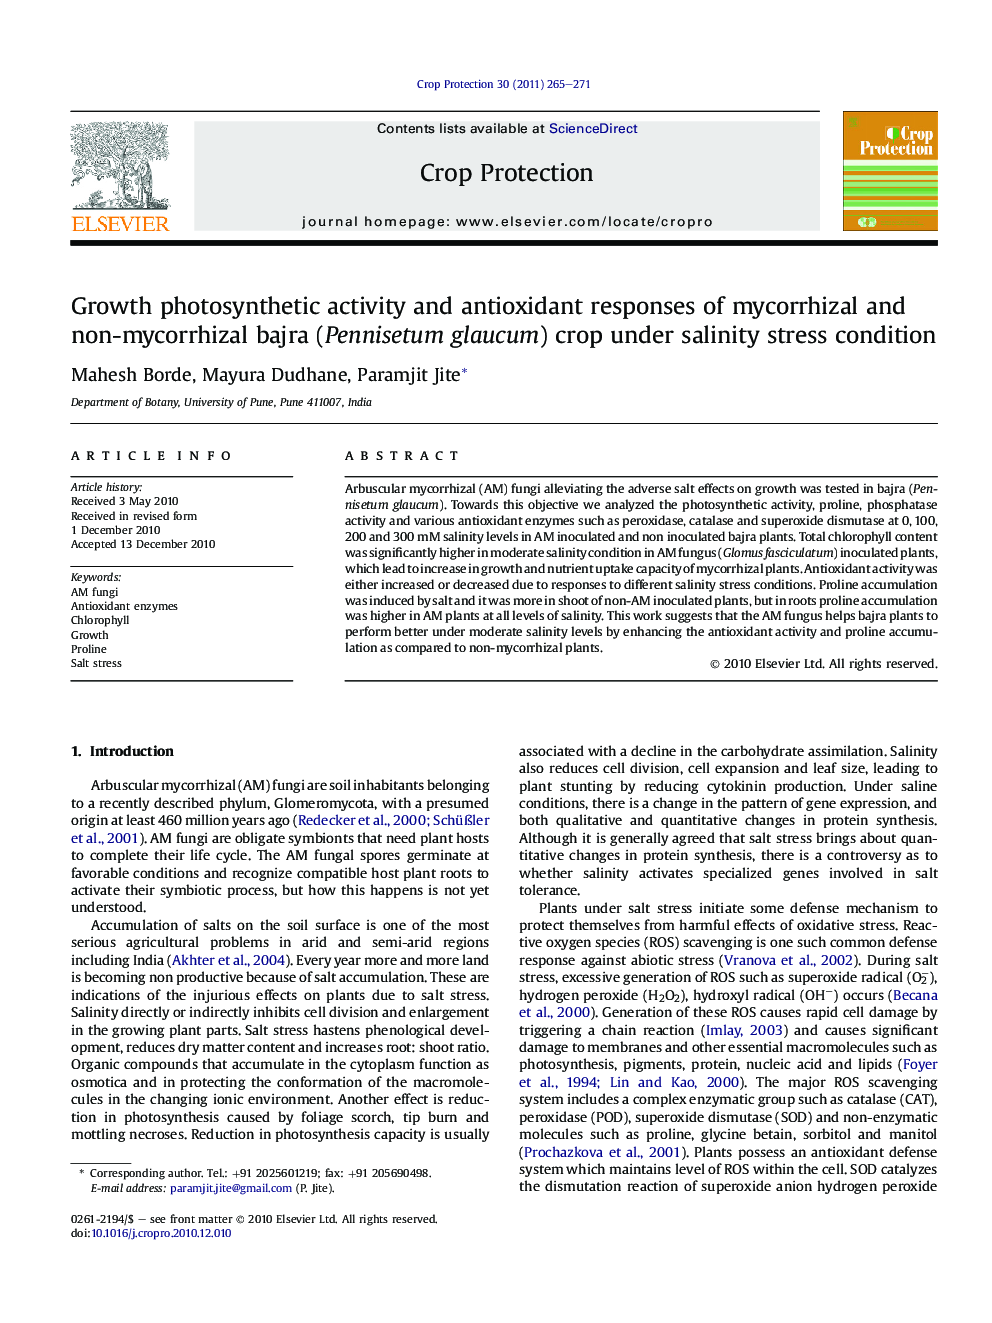 Growth photosynthetic activity and antioxidant responses of mycorrhizal and non-mycorrhizal bajra (Pennisetum glaucum) crop under salinity stress condition